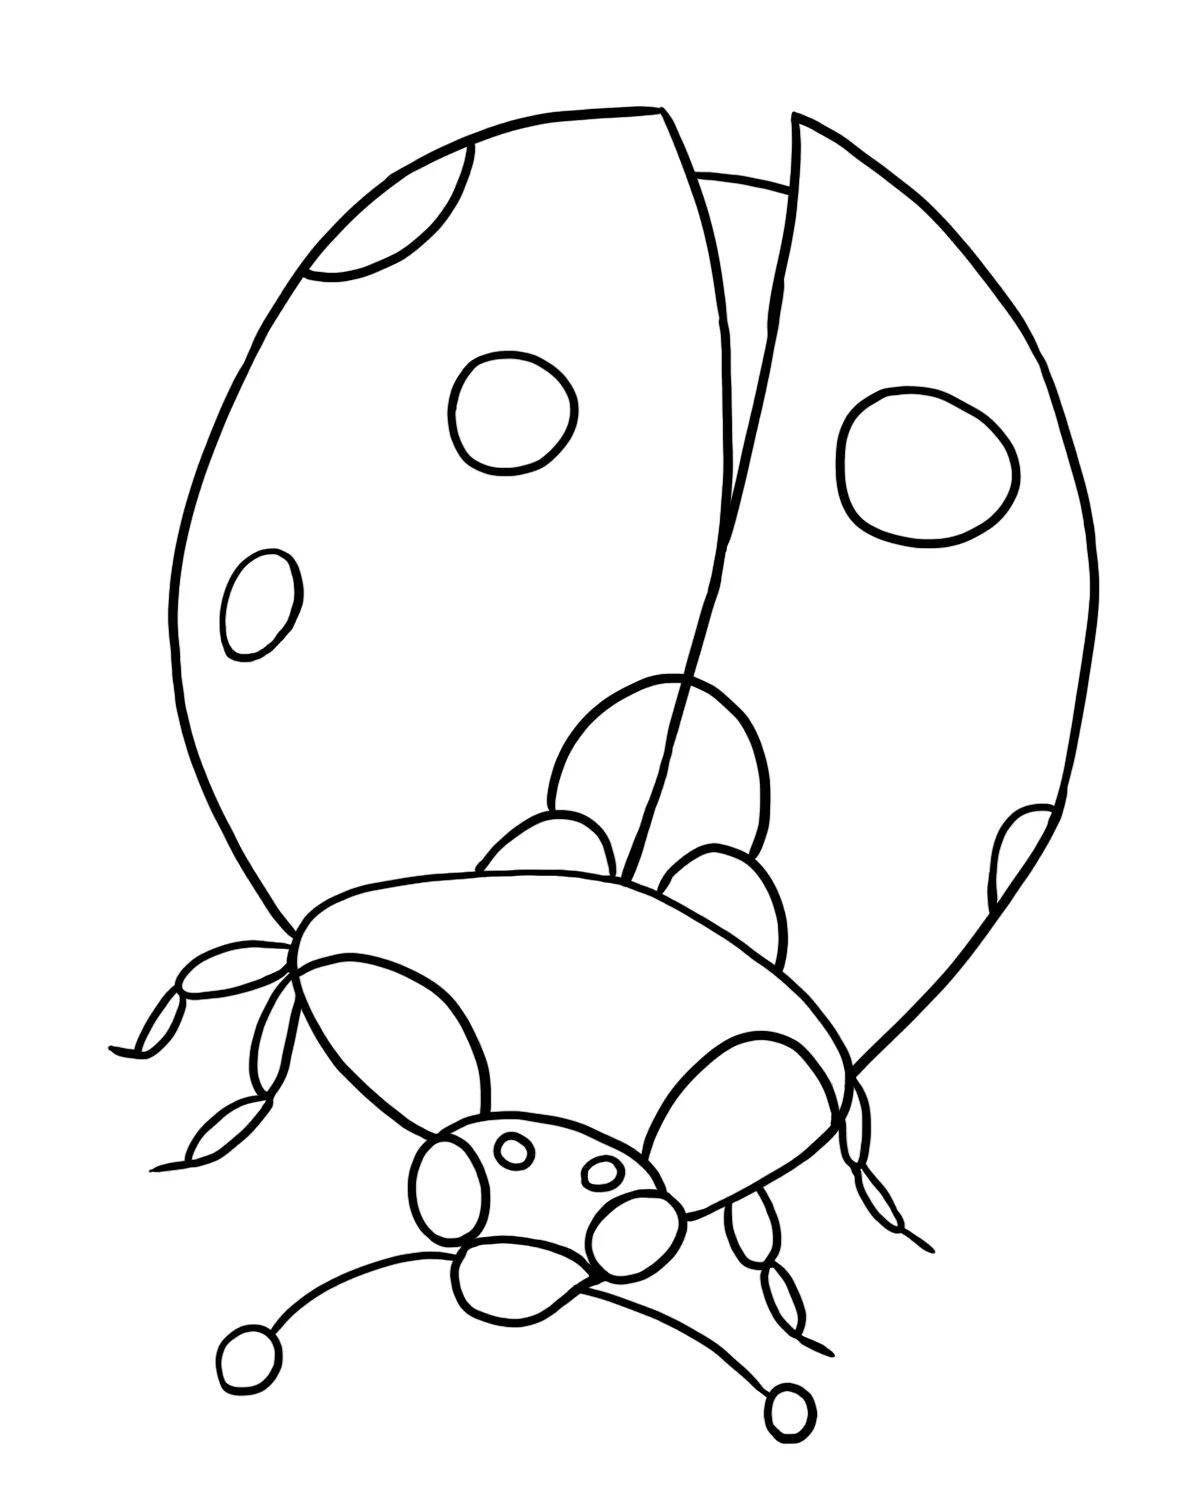 Adorable ladybug coloring page for kids